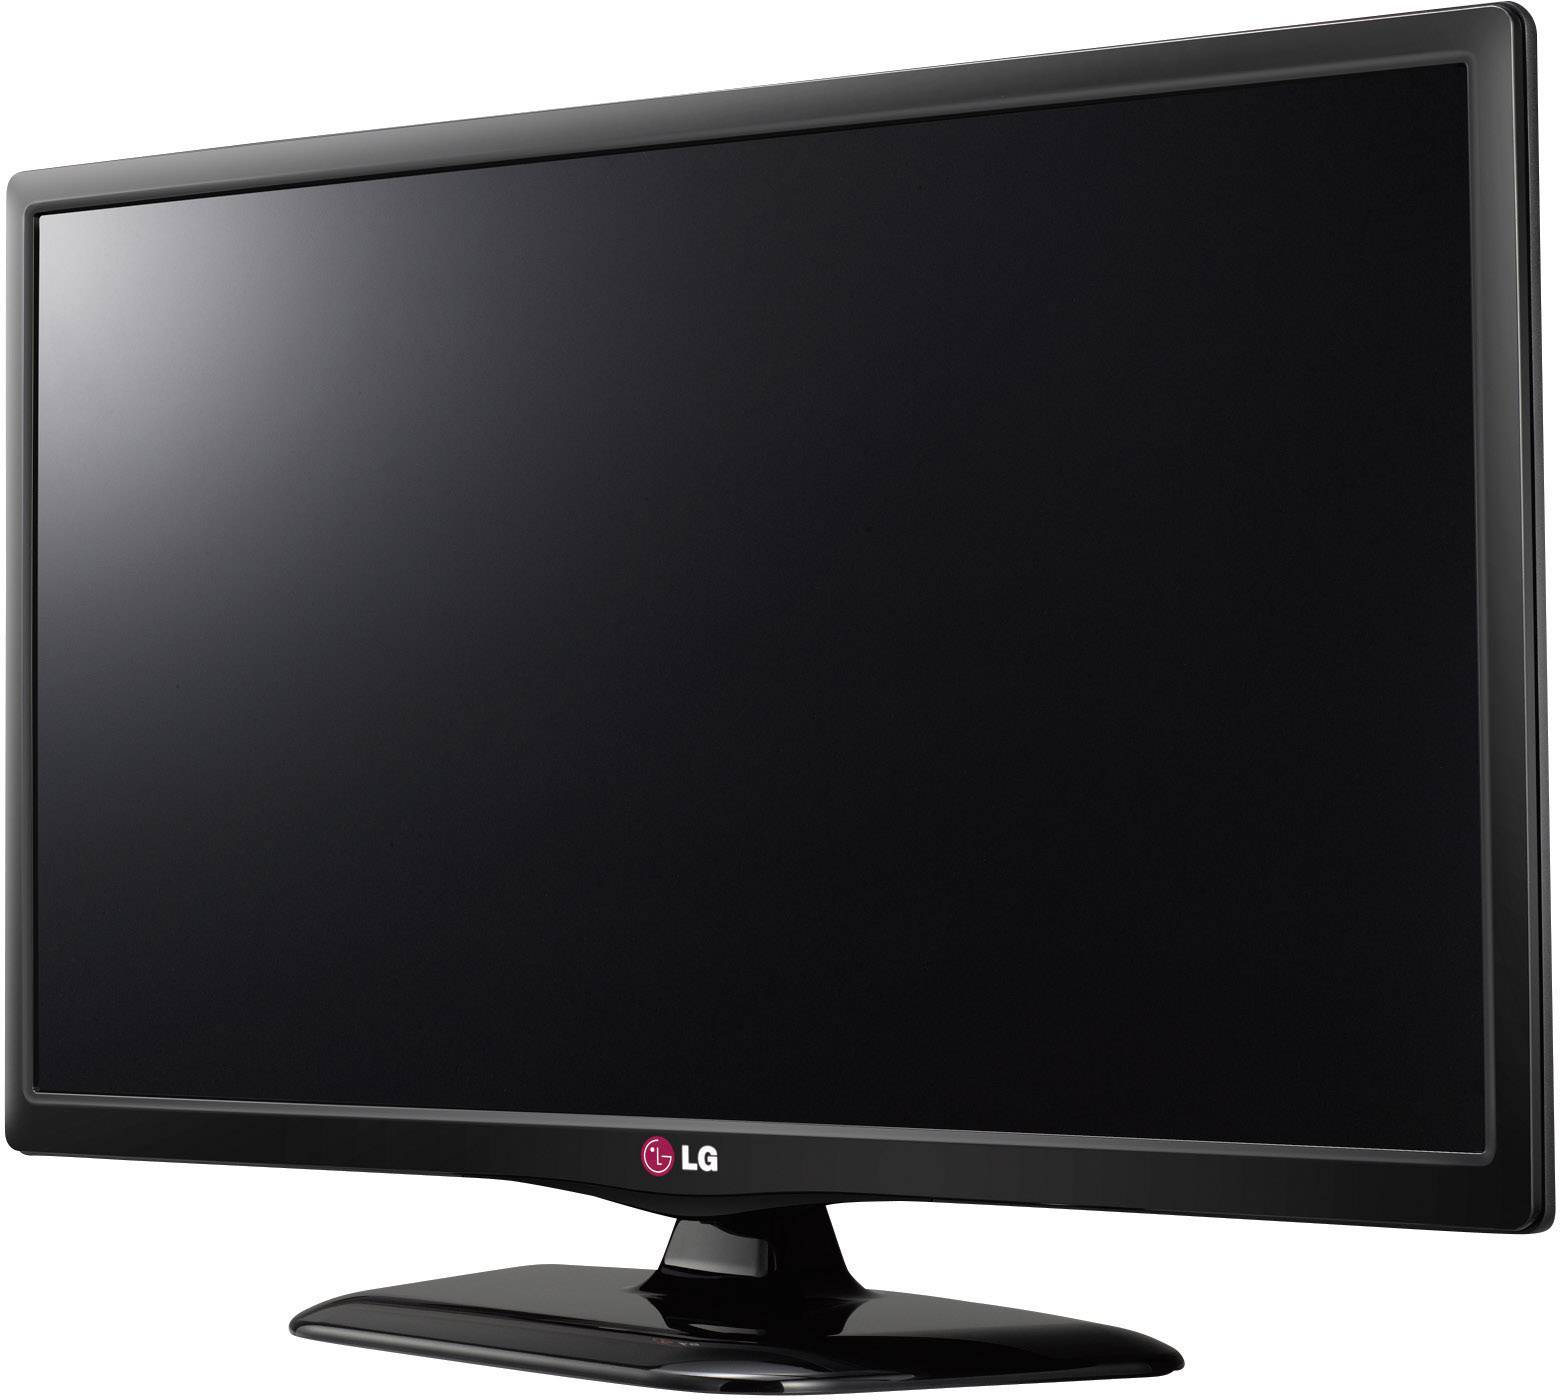 Lg телевизор ру. LG 28lb450u. Телевизор LG 28lb450u. Телевизор LG 28lb450u 28". Телевизор led 22 LG 22lf450u.